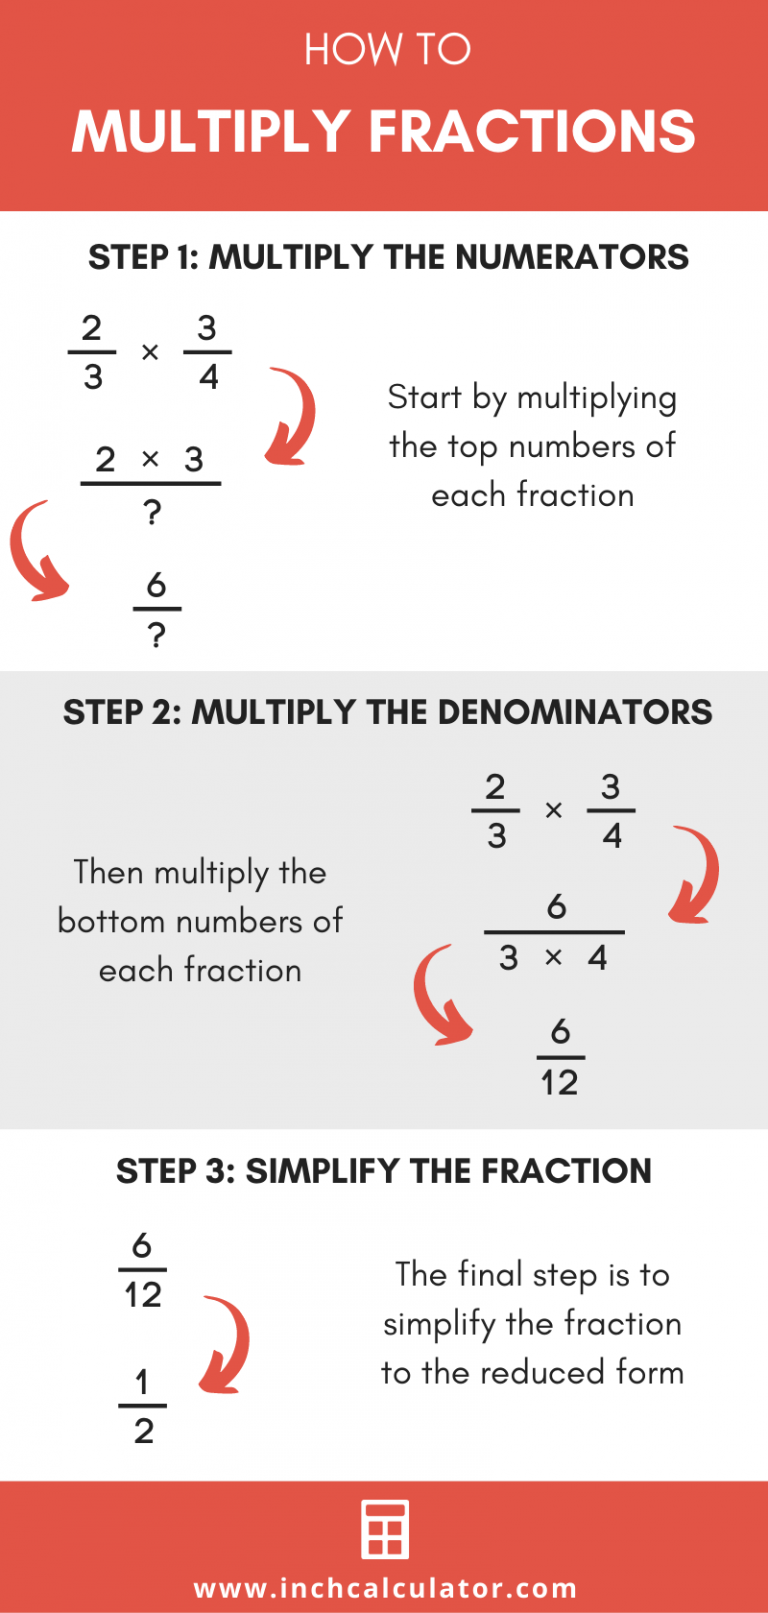 adding improper fractions calculator